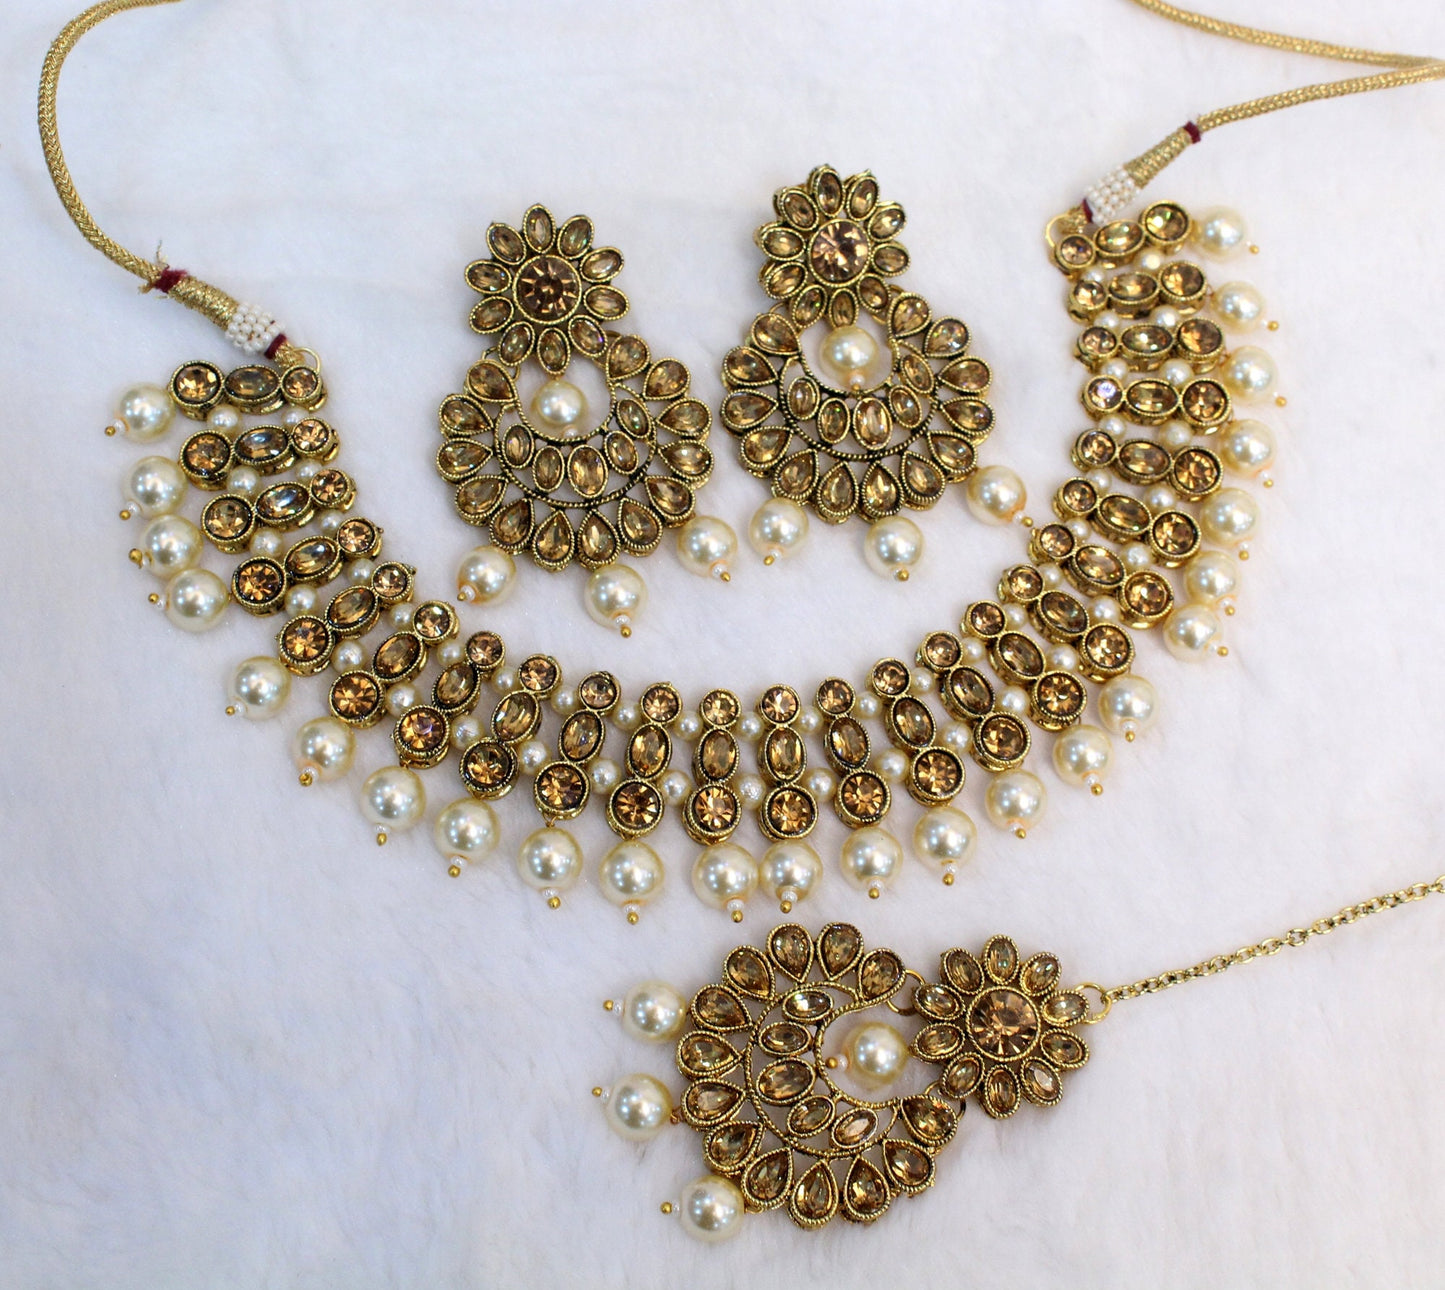 IndianJewellery/dark gold Bridal Kundan necklace Set/Bollywood Gold Indian Jewellery Necklace Set